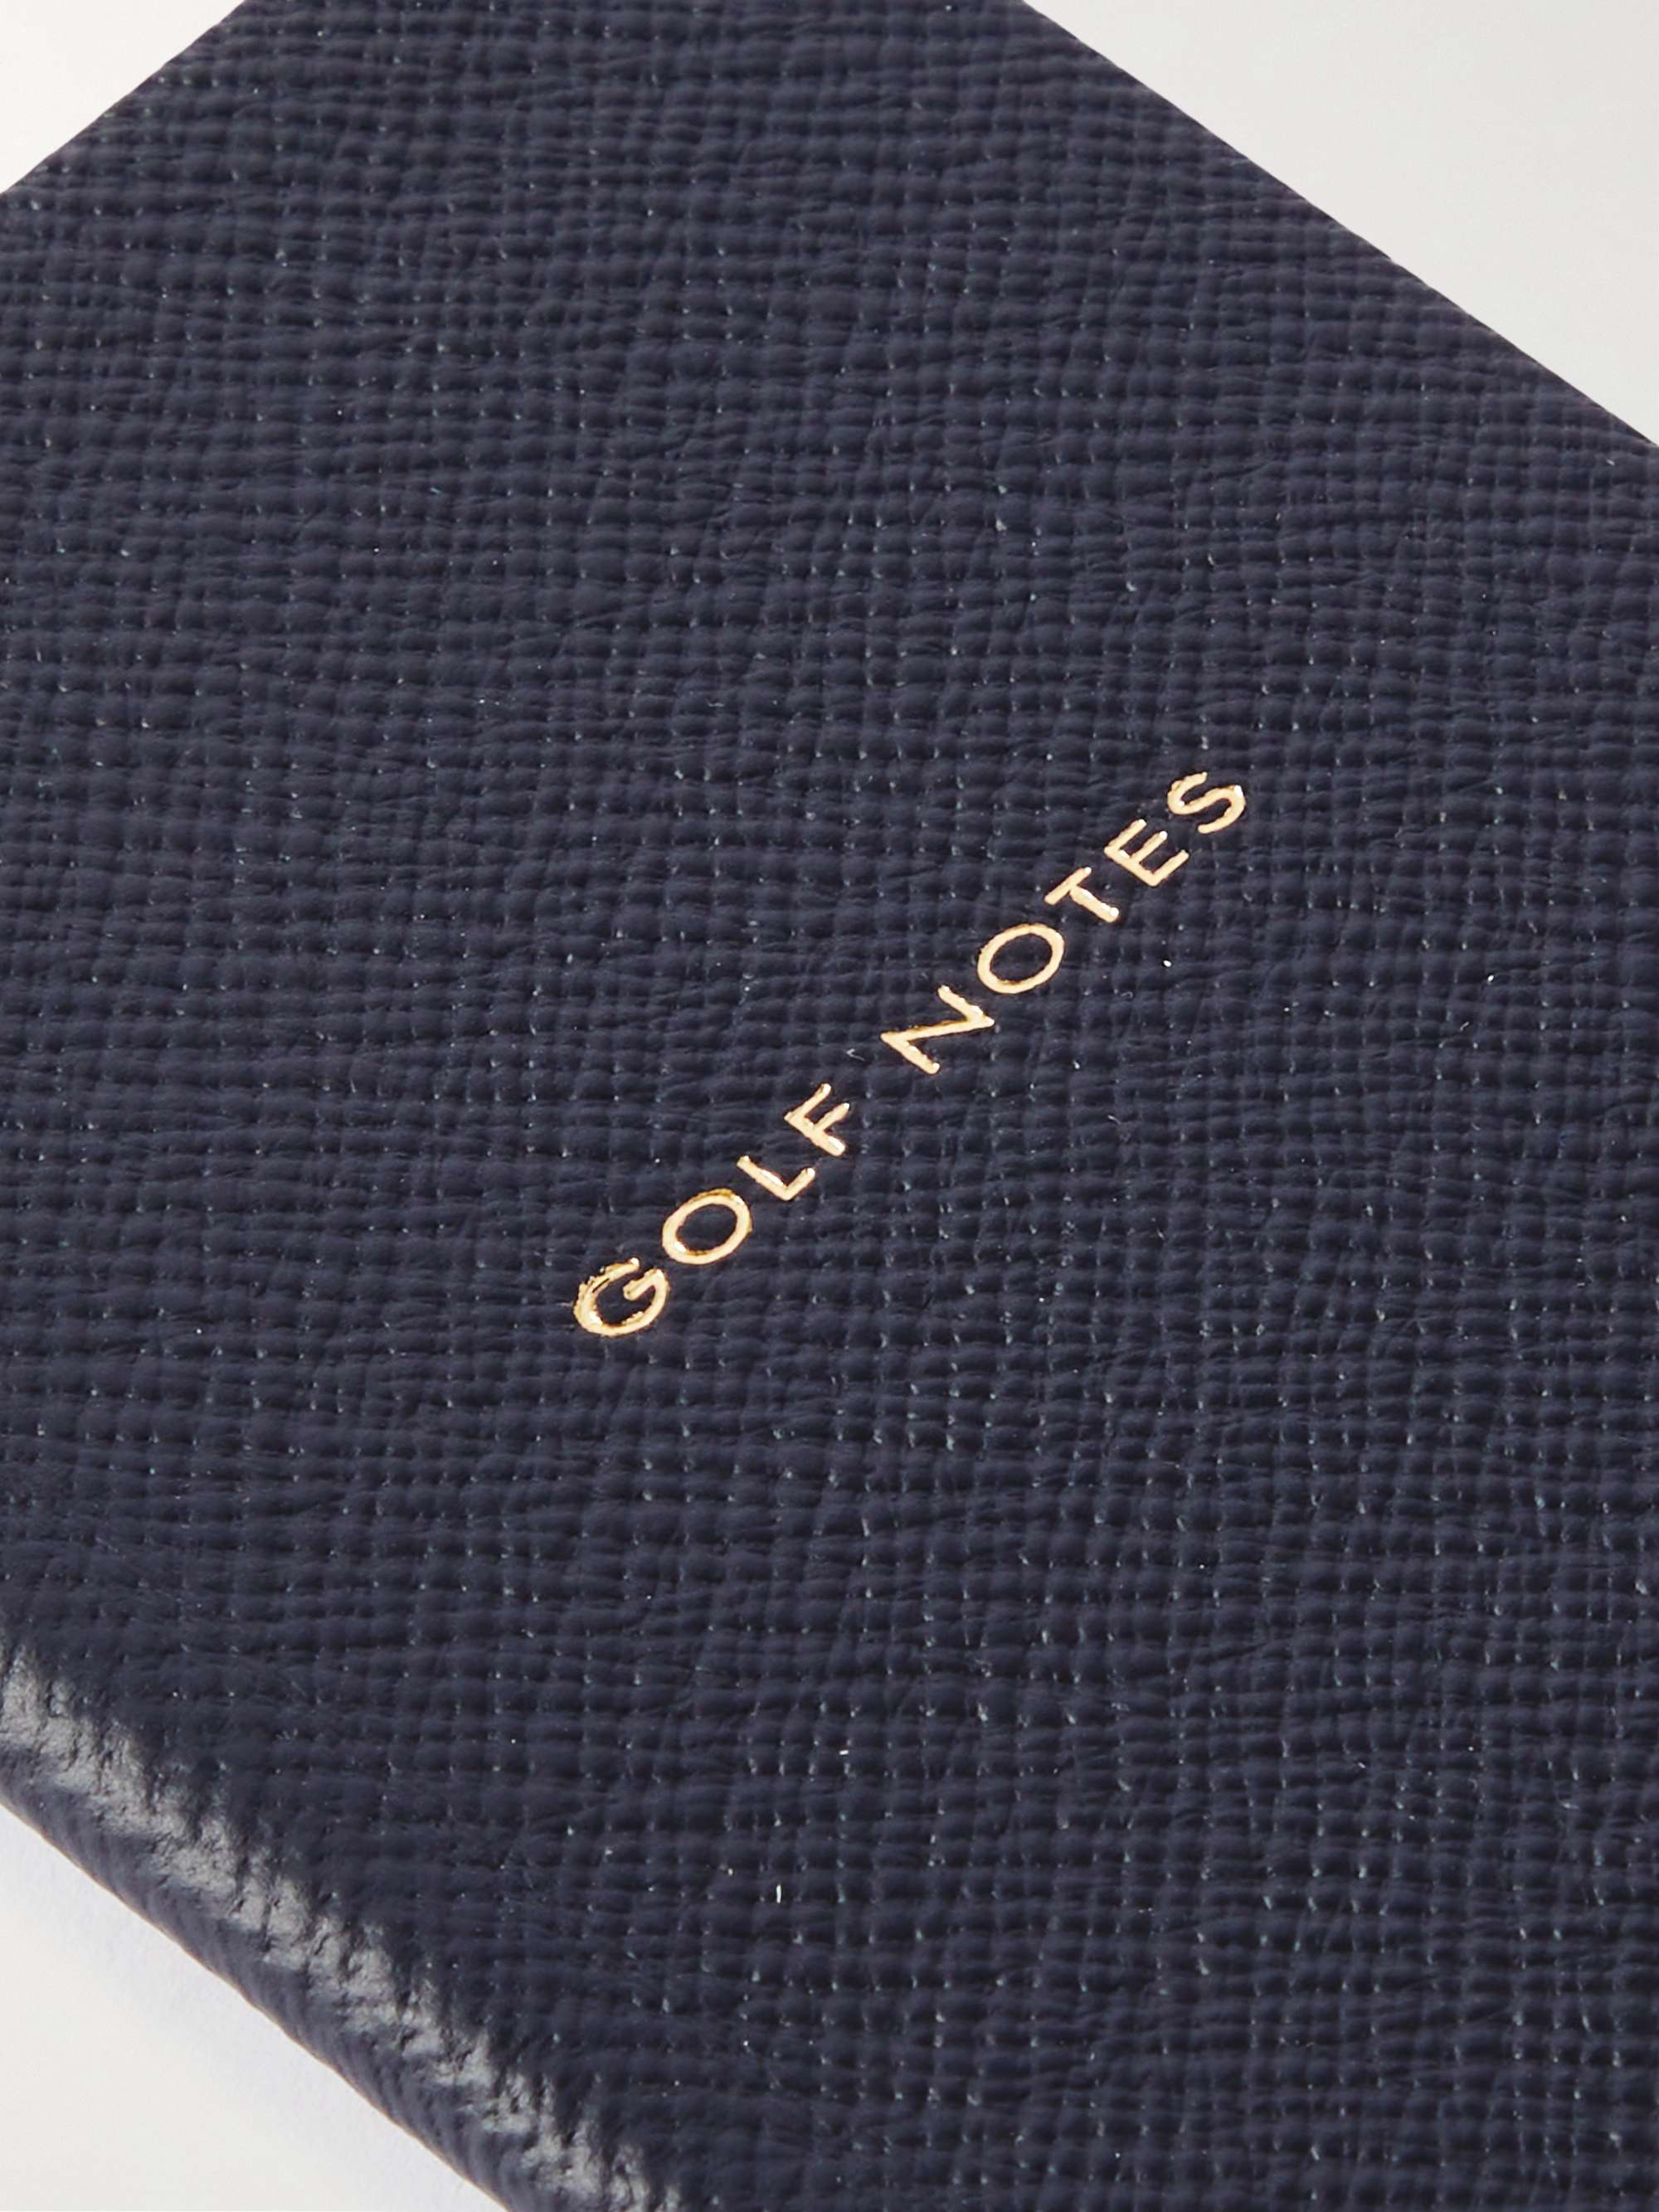 SMYTHSON Panama Golf Notes Cross-Grain Leather Notebook